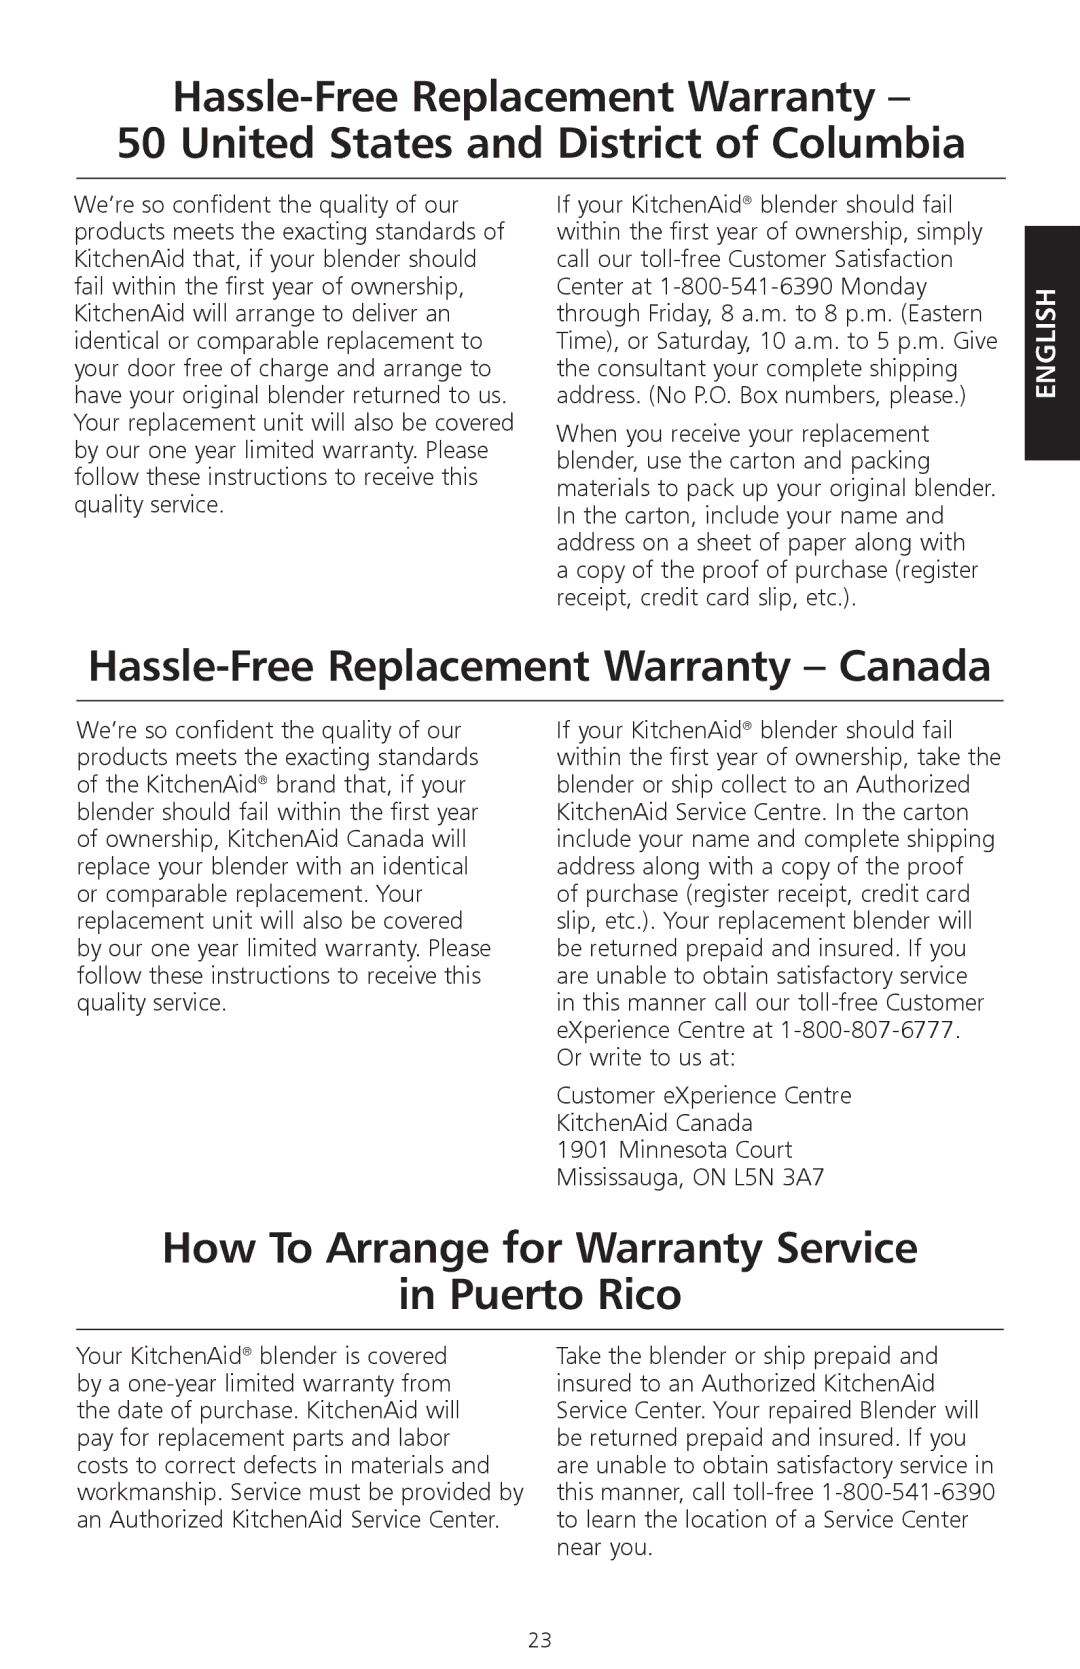 KitchenAid KSB580, KSB560, KSB570 Hassle-Free Replacement Warranty Canada, How To Arrange for Warranty Service Puerto Rico 